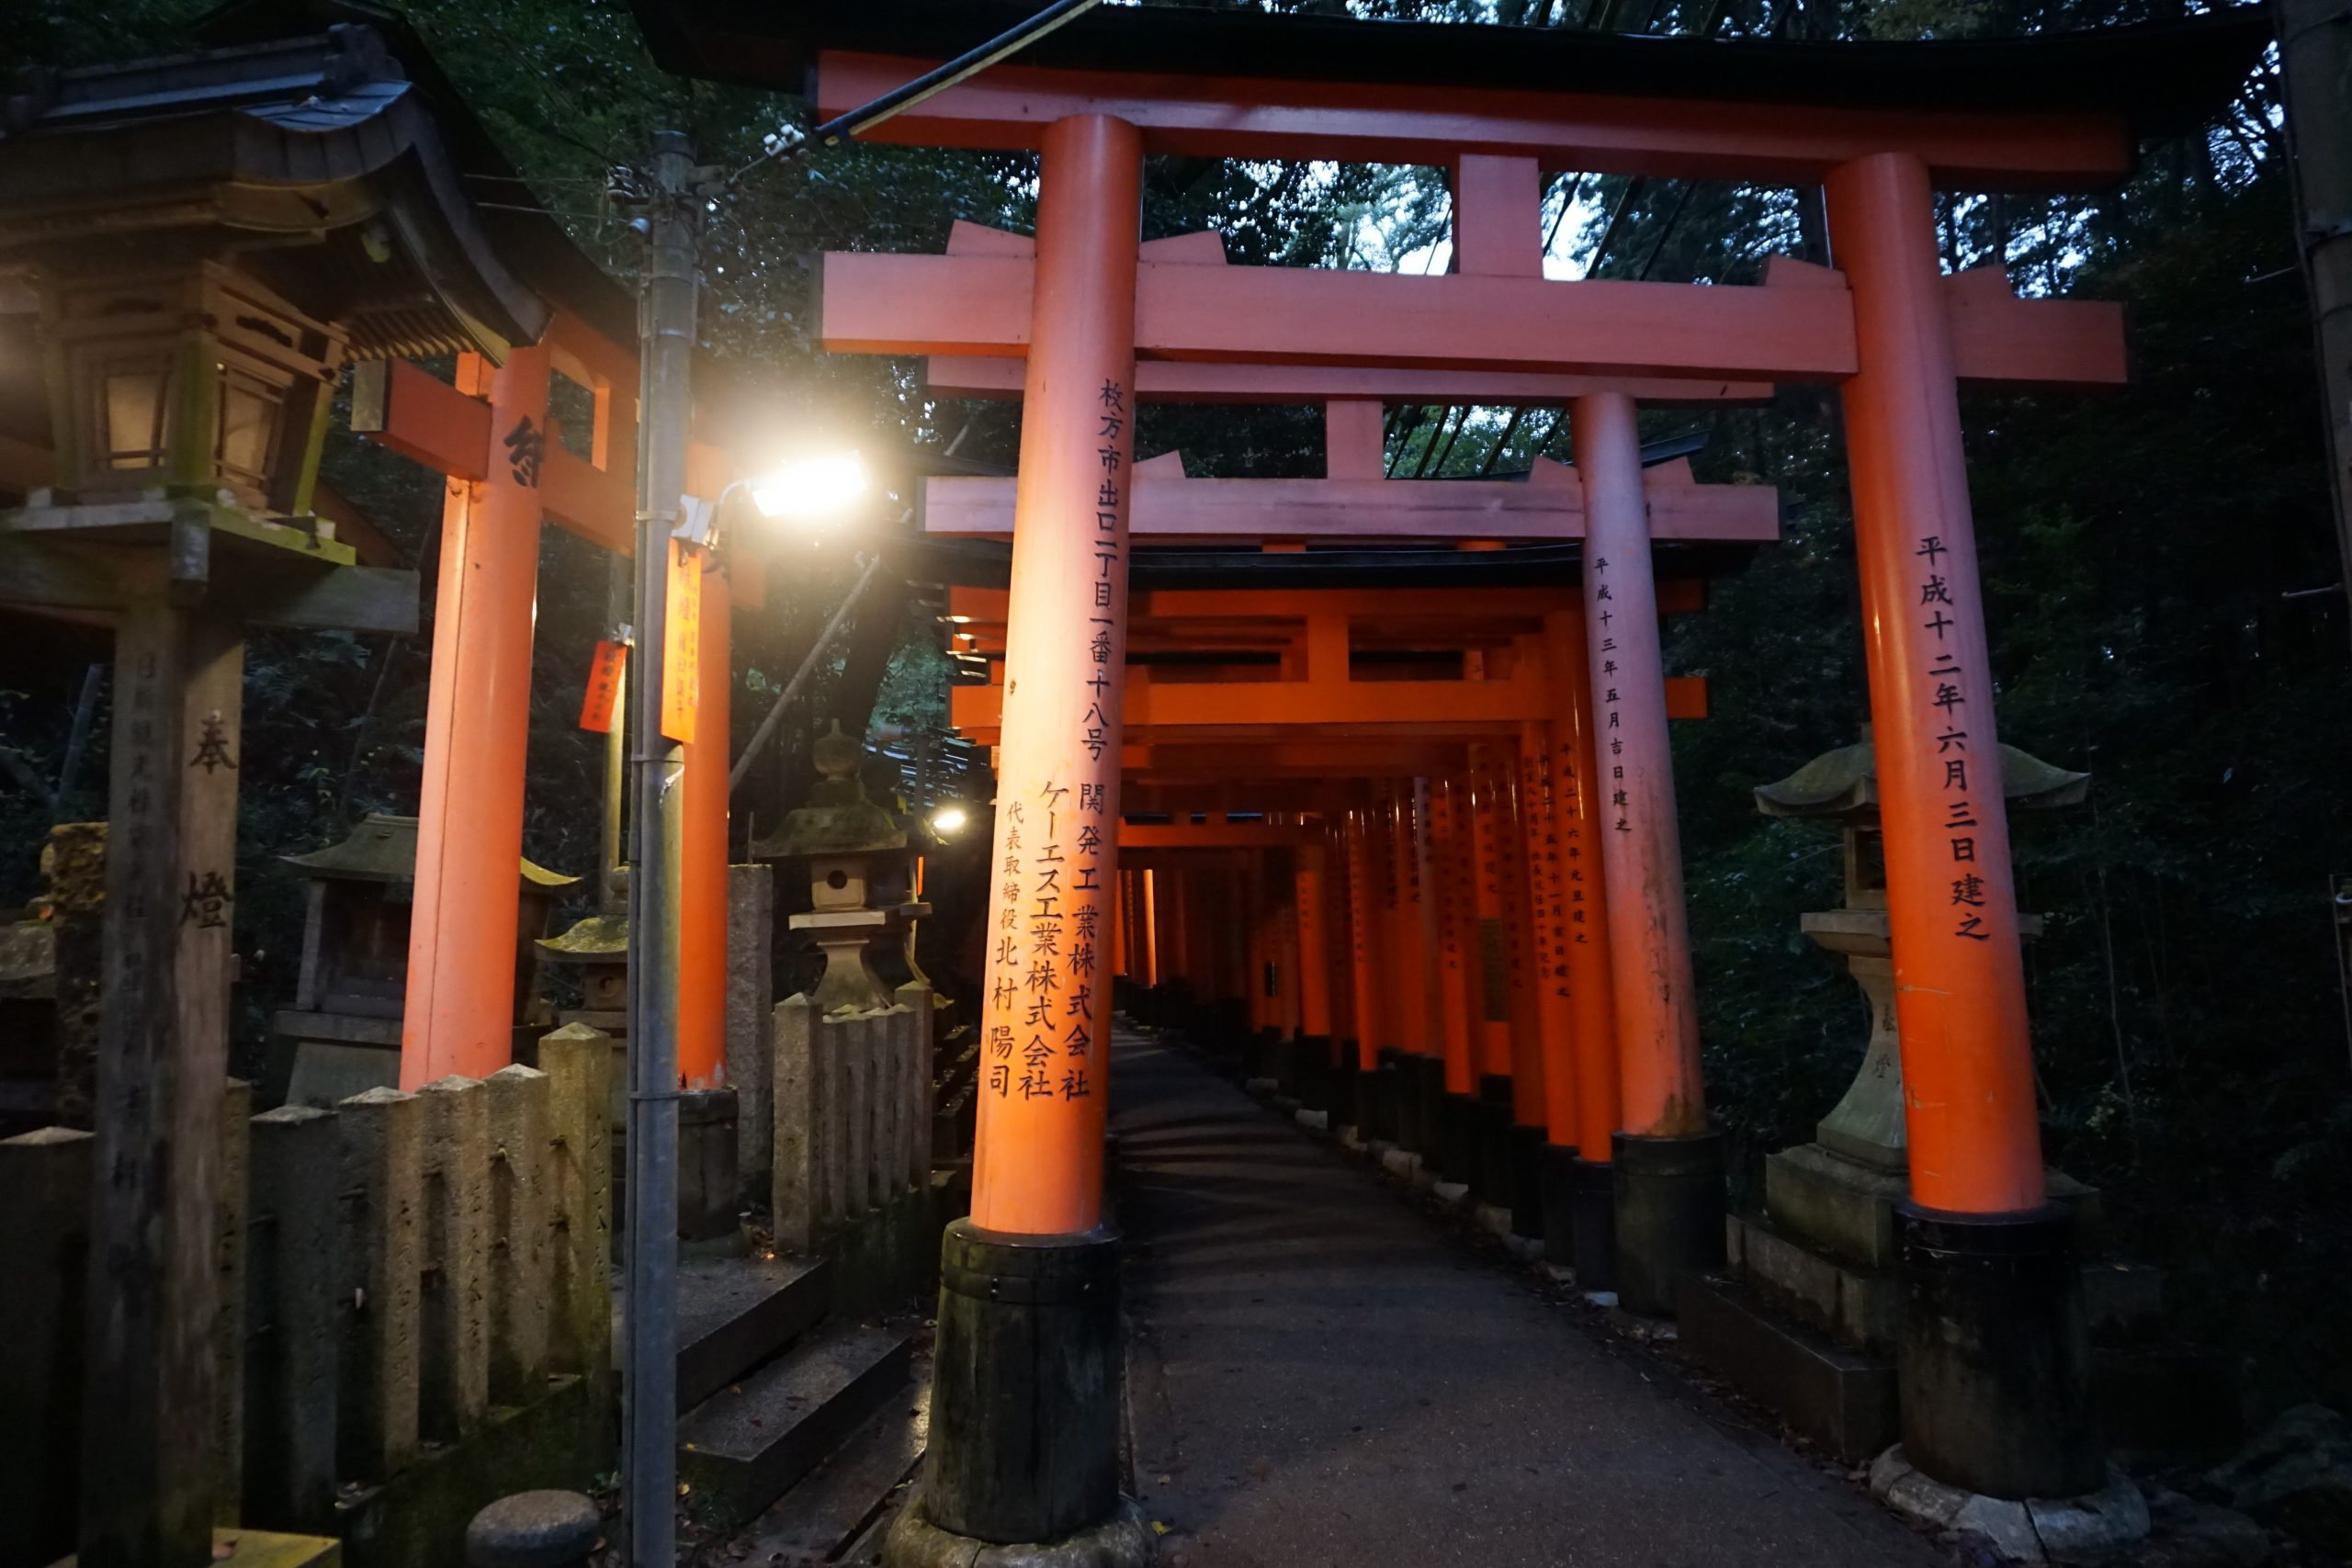 Large torii gate at Fushimi Inari Shrine with donor name written on it